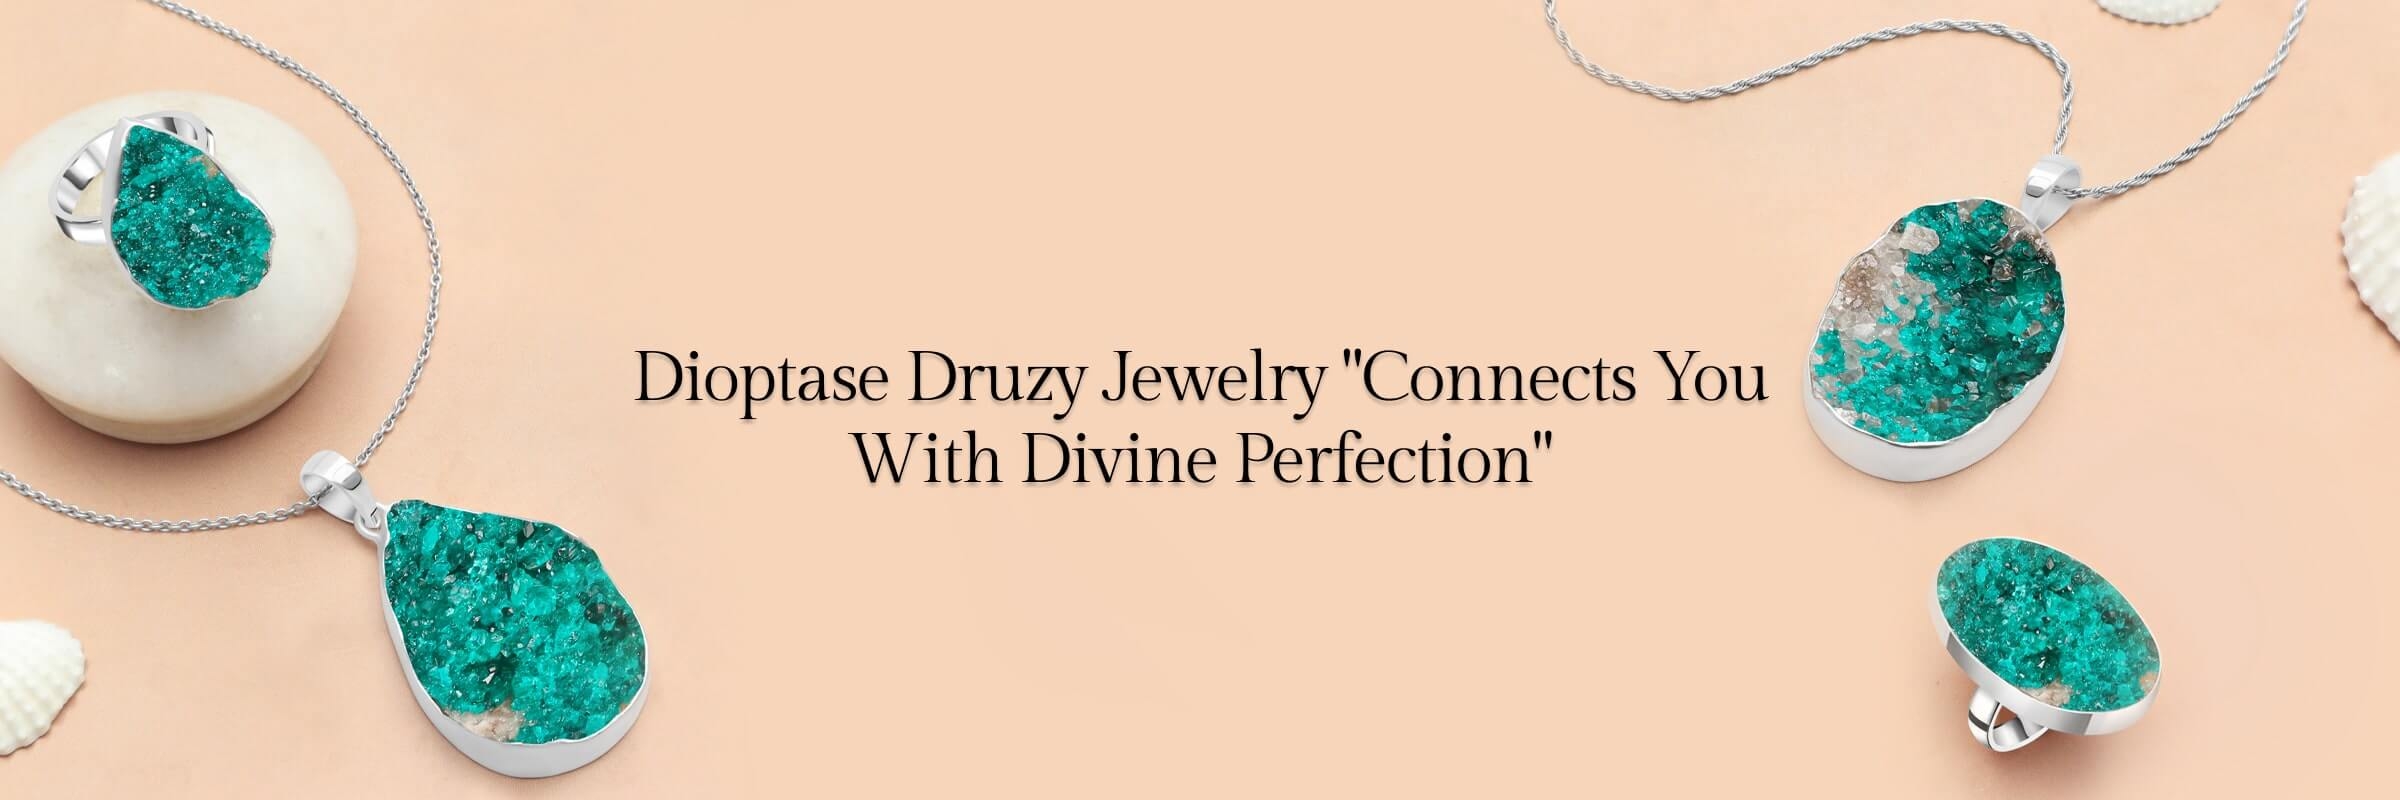 Dioptase Druzy Jewelry Spiritual Healing Properties